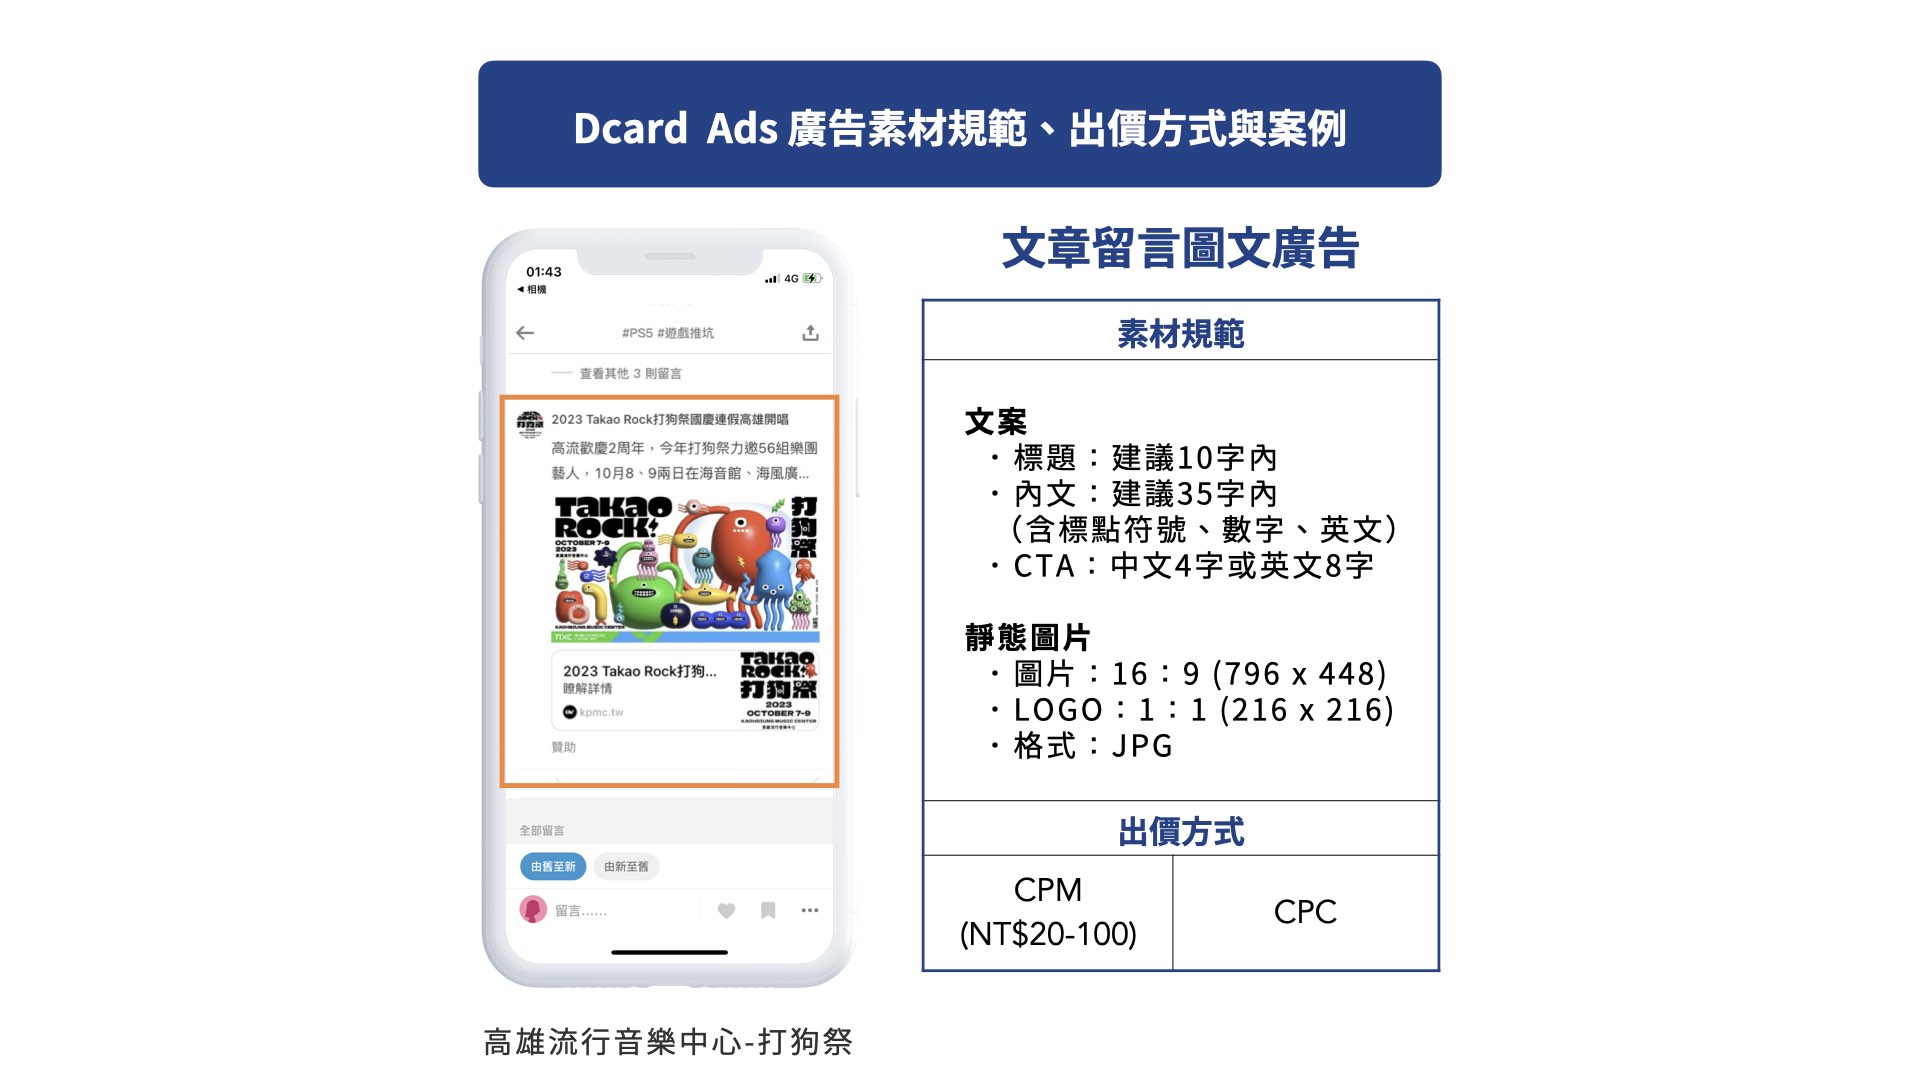 Dcard Ads 文章留言圖文廣告廣告素材規範、出價方式與高雄流行音樂中心：2023 Takao Rock 打狗祭廣告案例